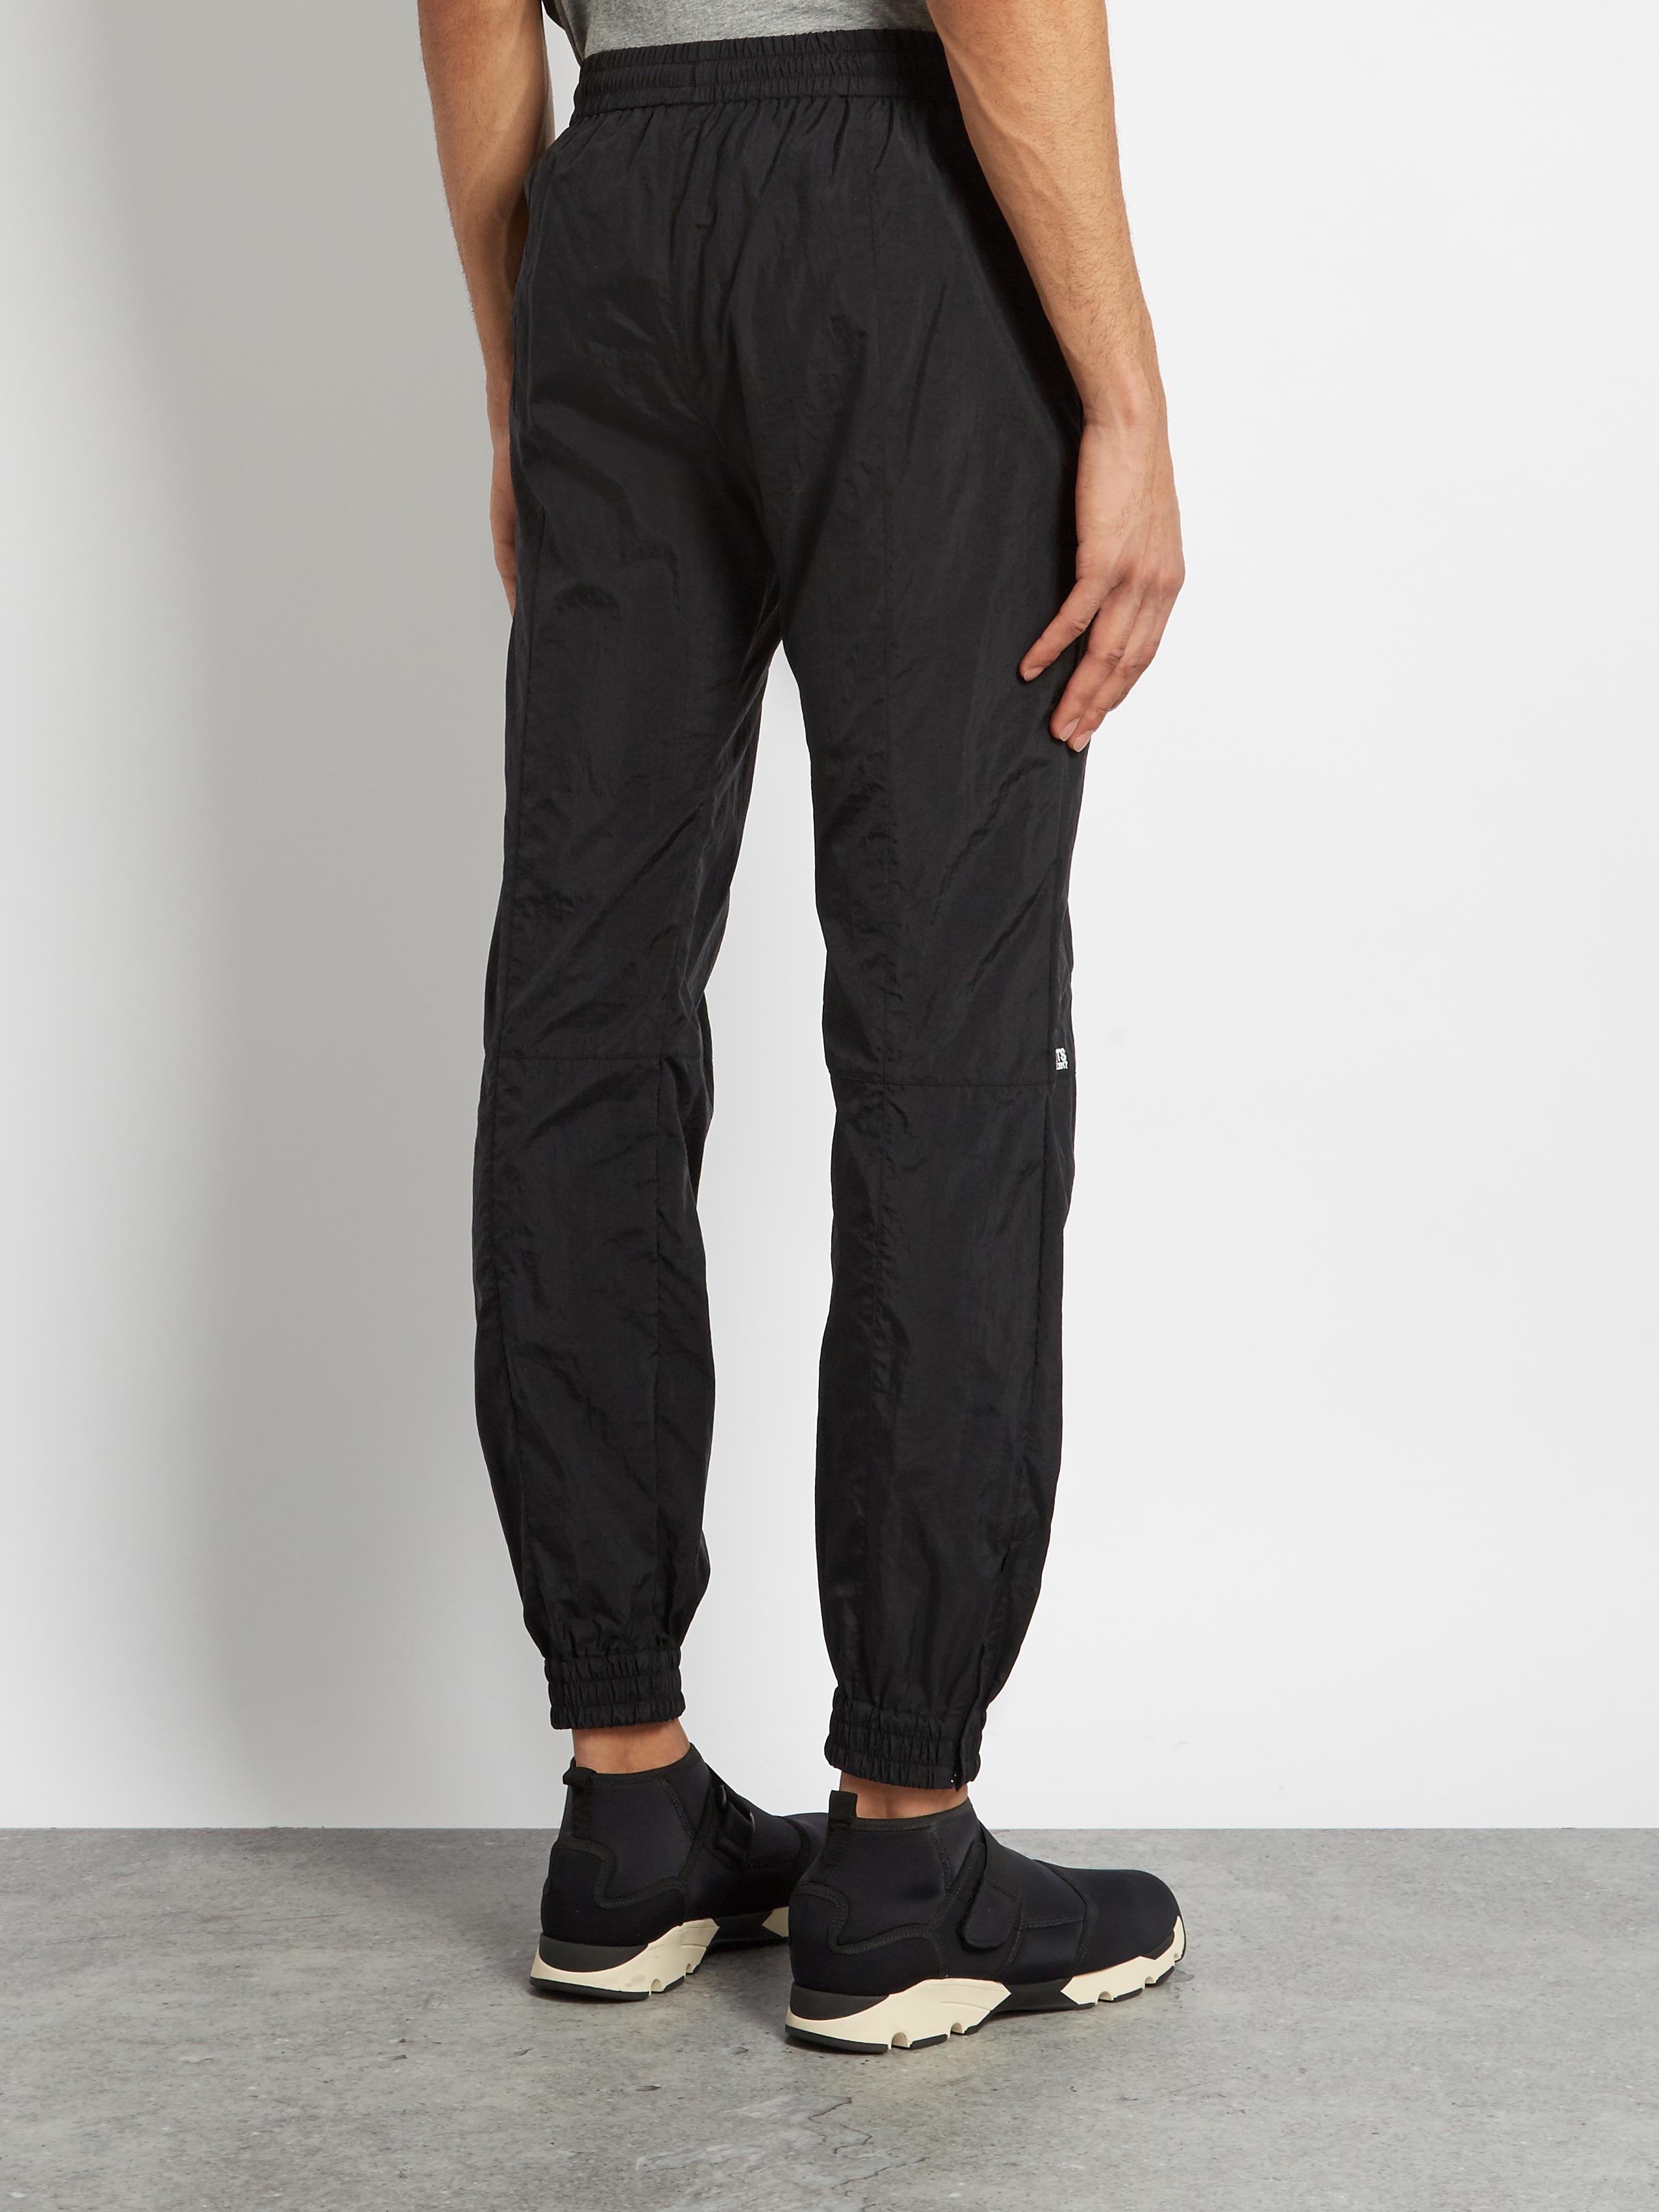 Vetements X Reebok Relaxed-leg Track Pants in Black for Men | Lyst